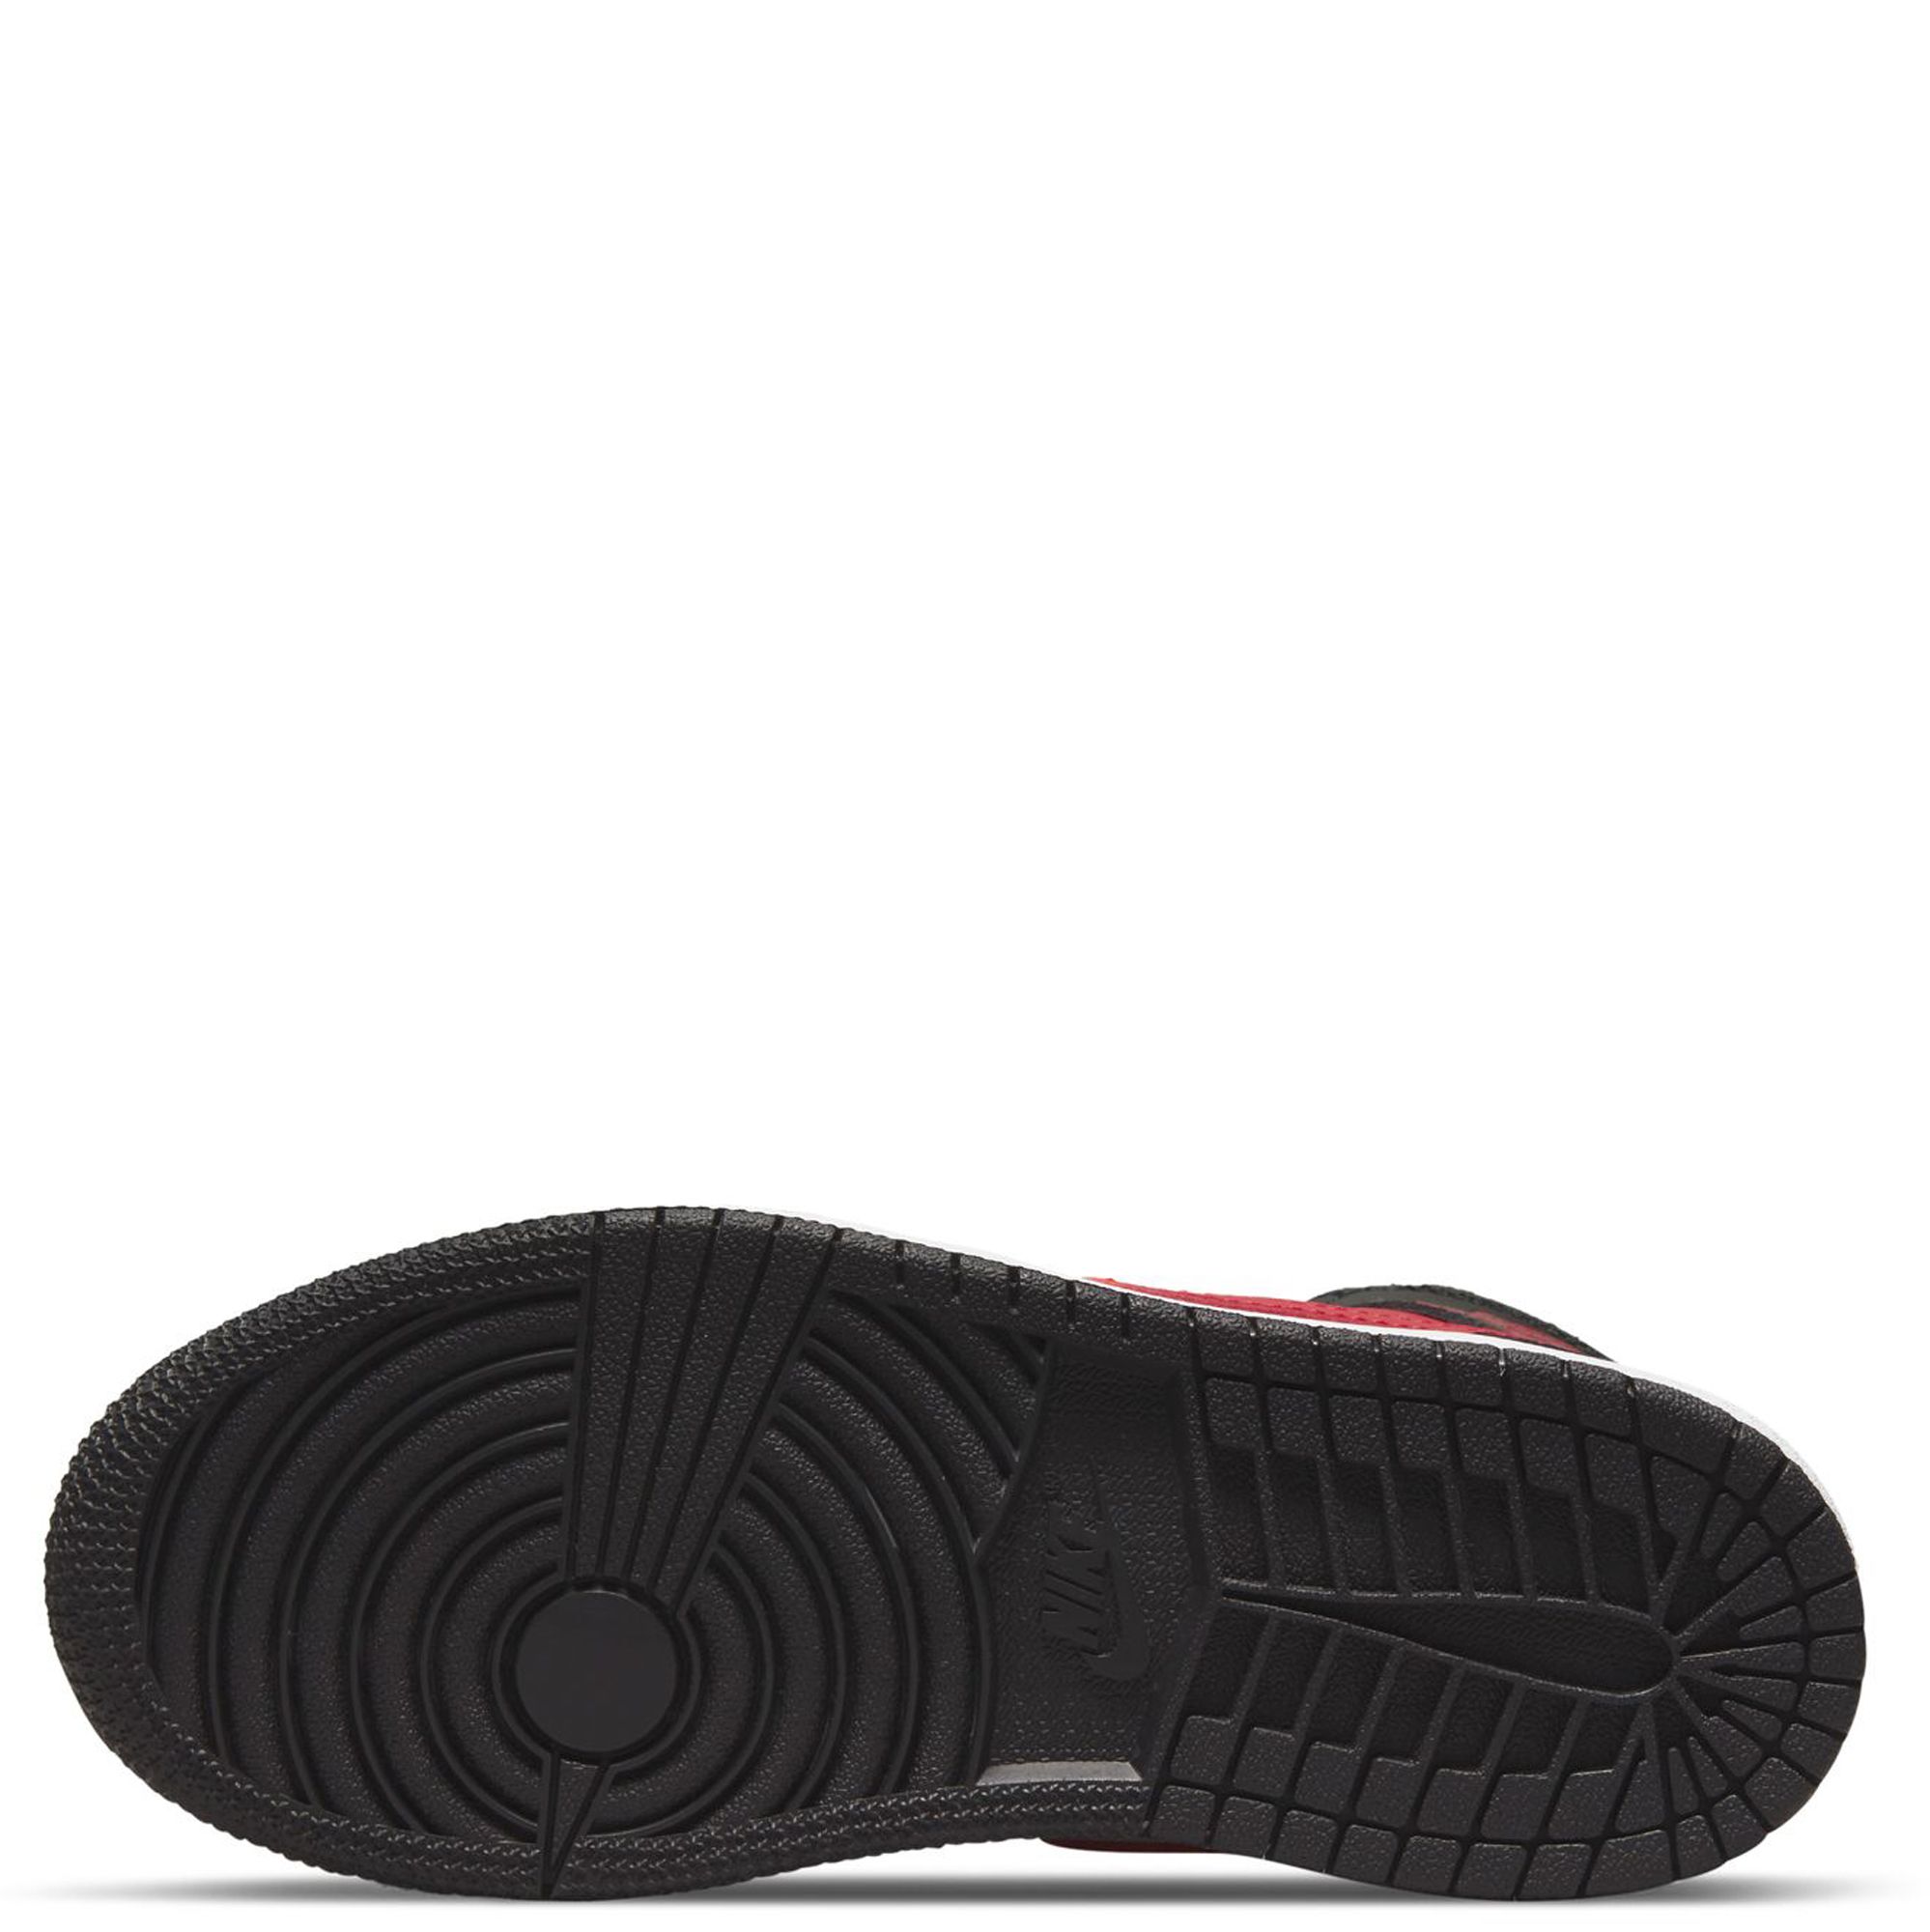 Nike air Mint jordan 1 mid td black fire red white toddler sneakers  640735-079 6c